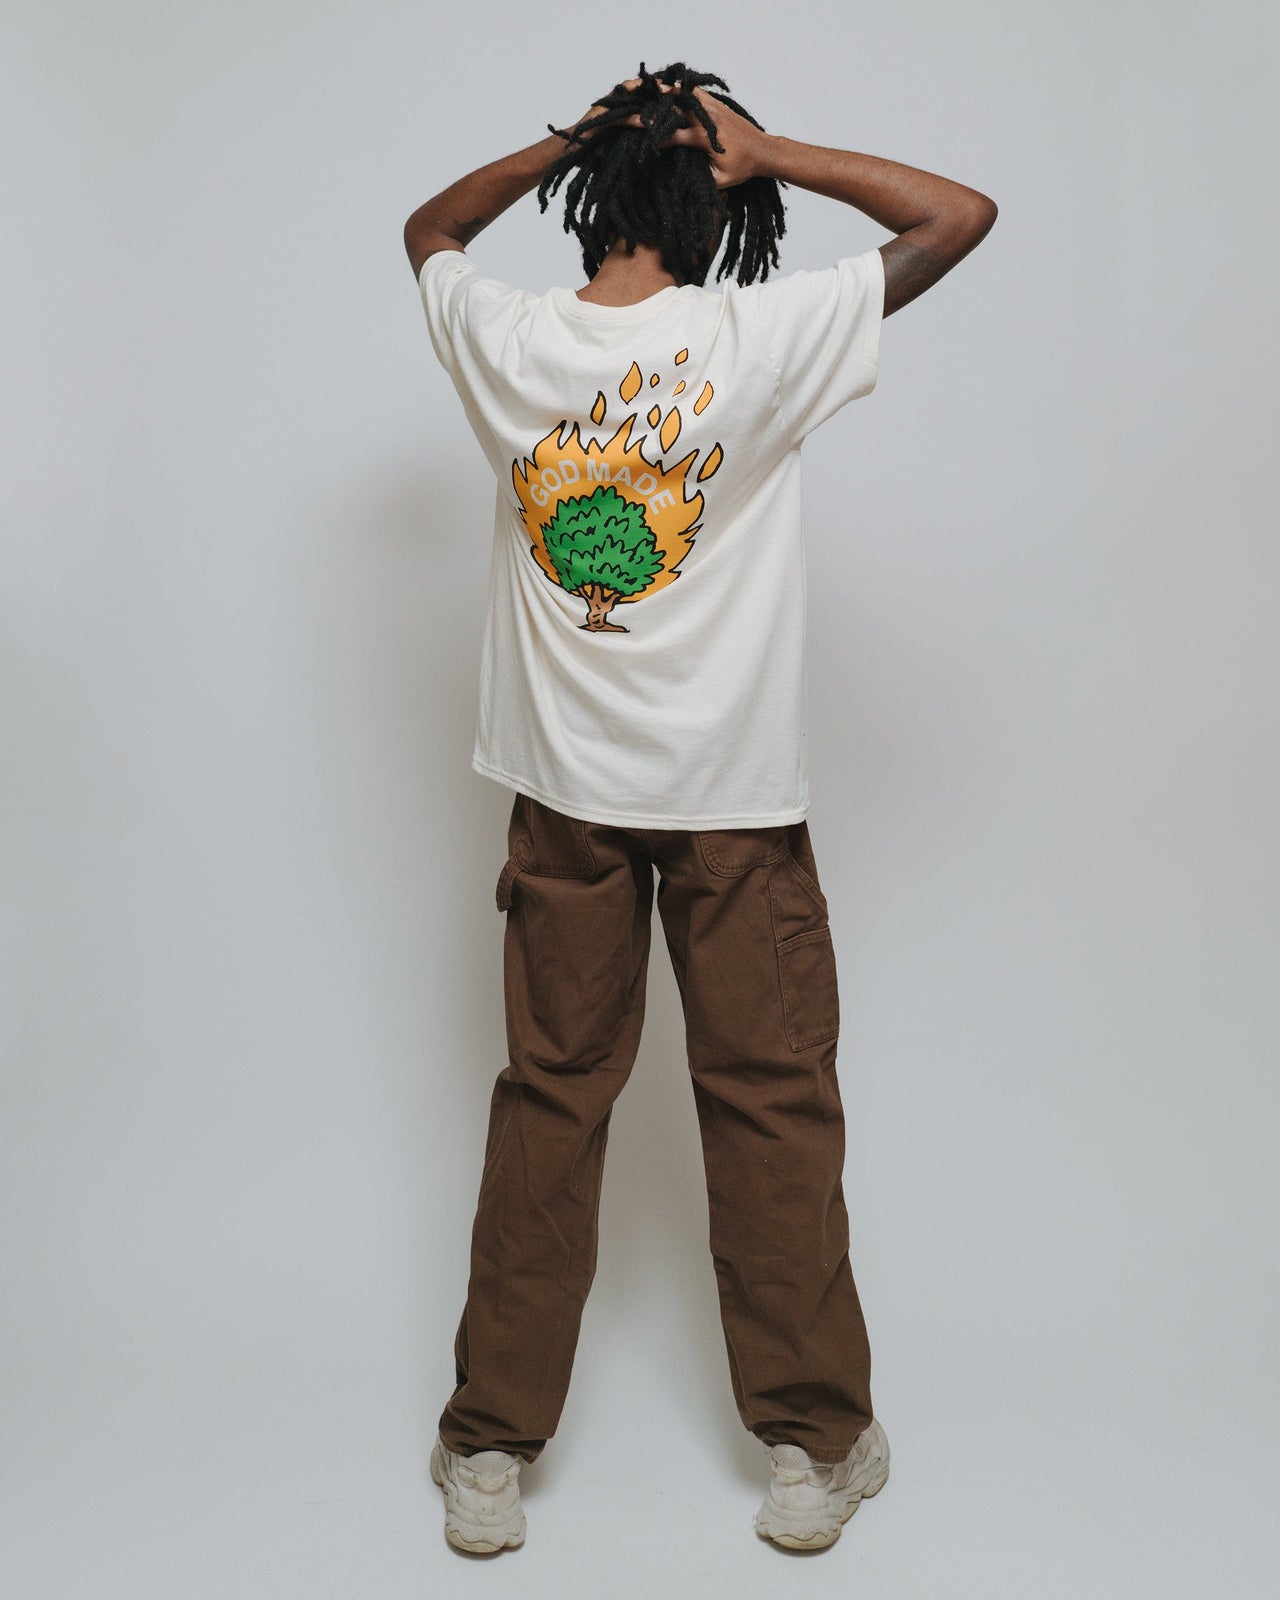 Burning Bush T-Shirt by NHIM APPAREL christian clothing brand. natural colored shirt with burning bush saying "GOD MADE"